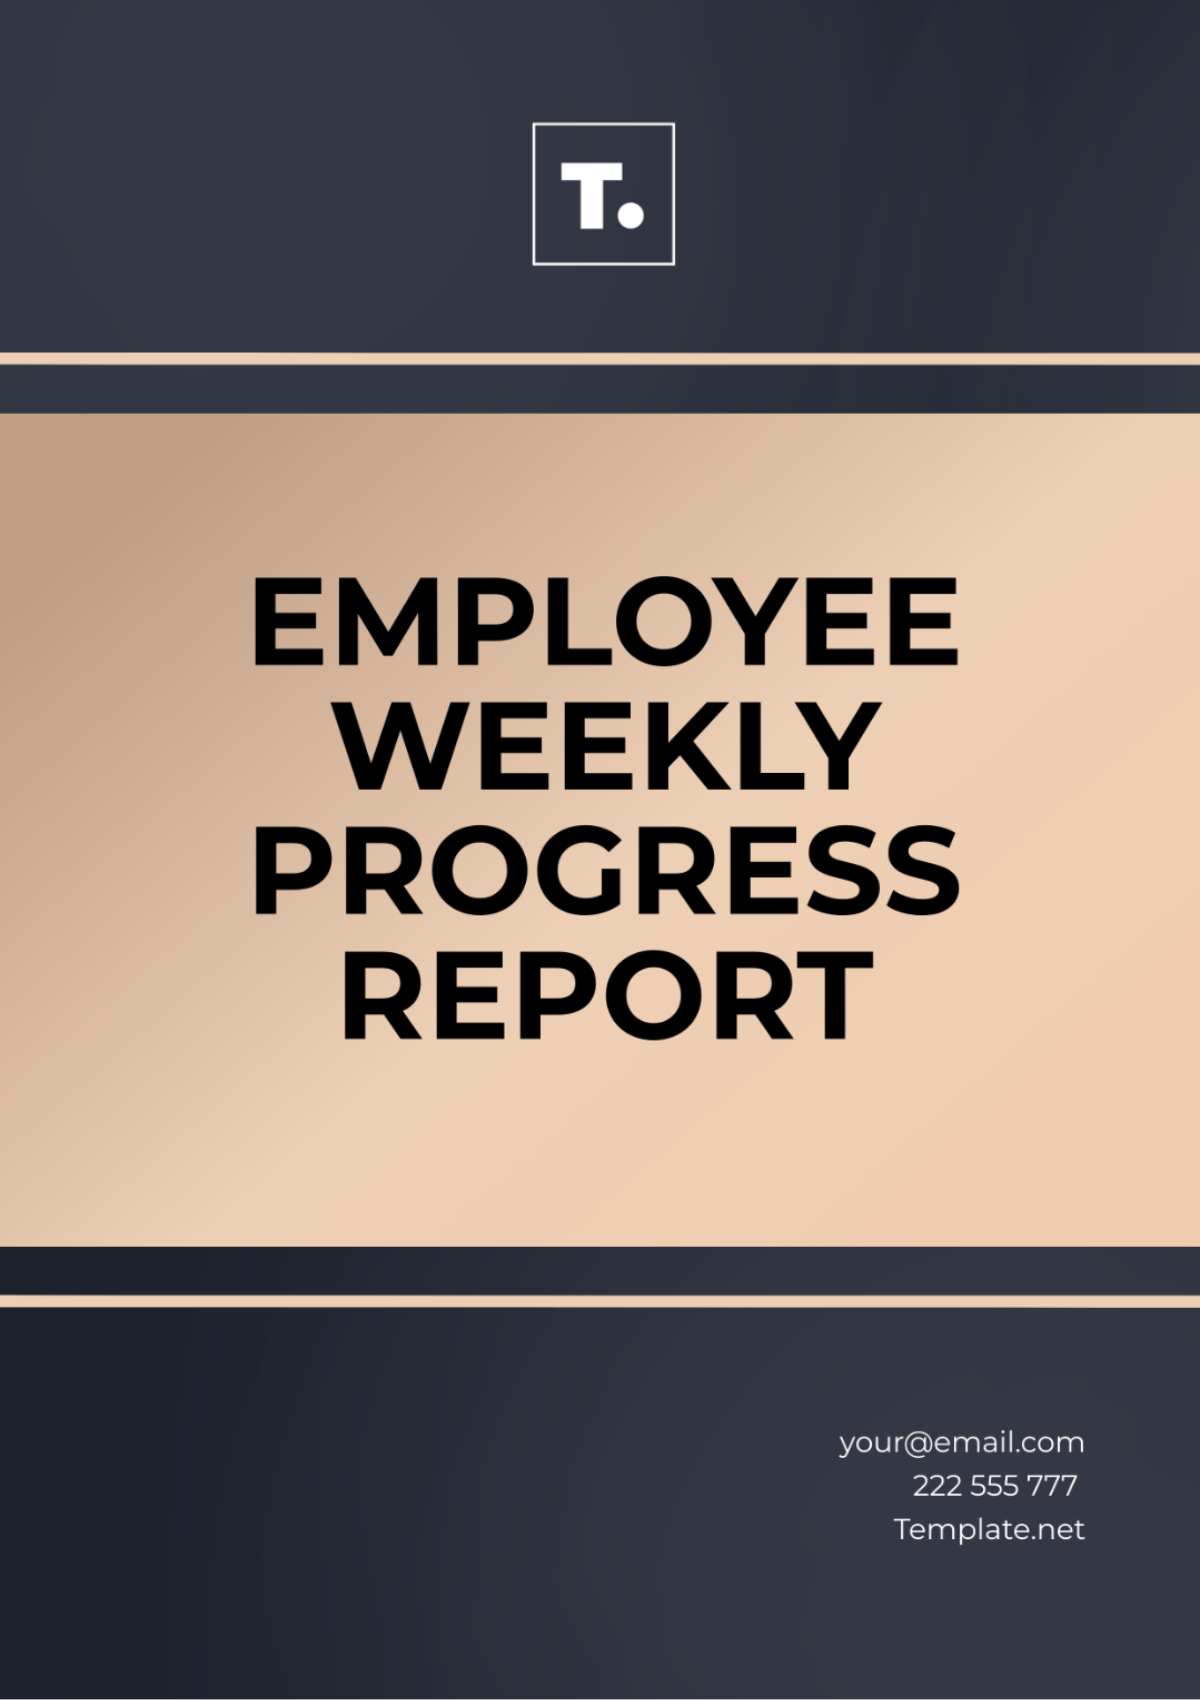 Employee Weekly Progress Report Template